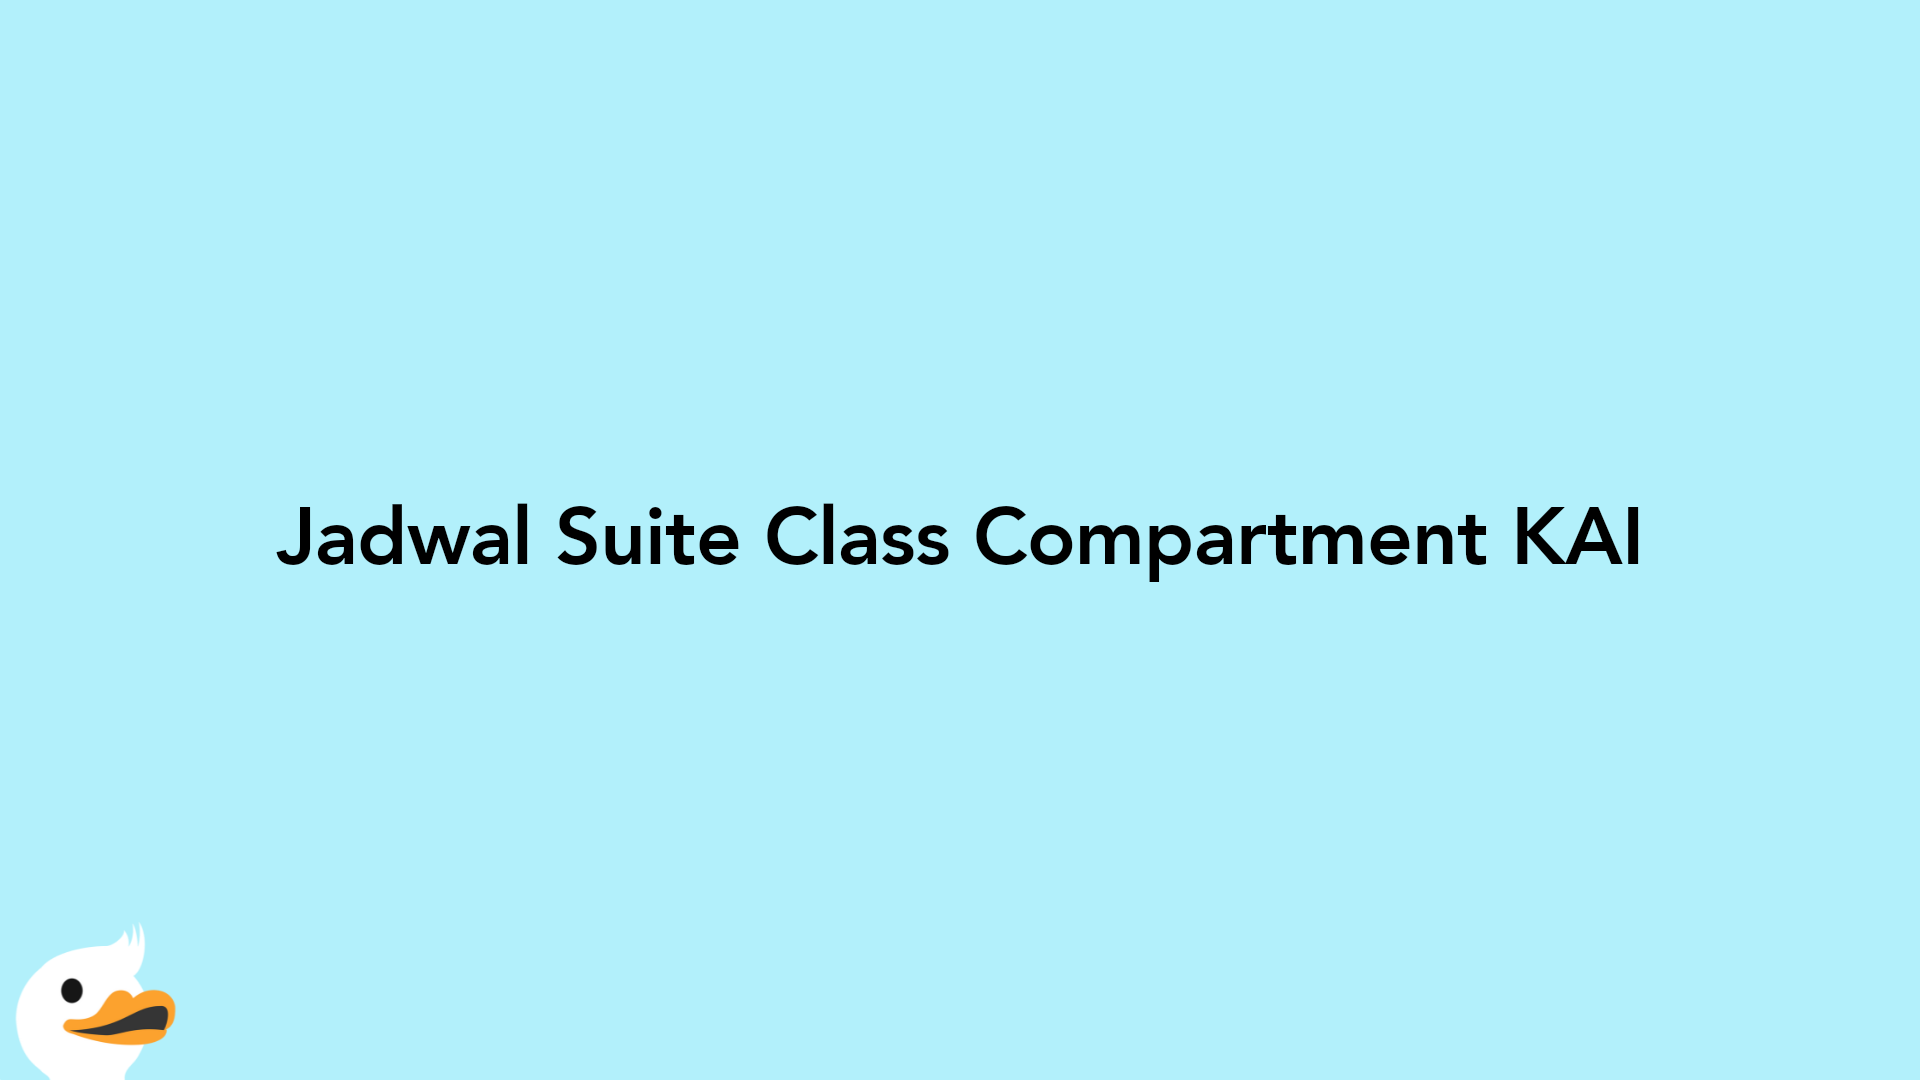 Jadwal Suite Class Compartment KAI